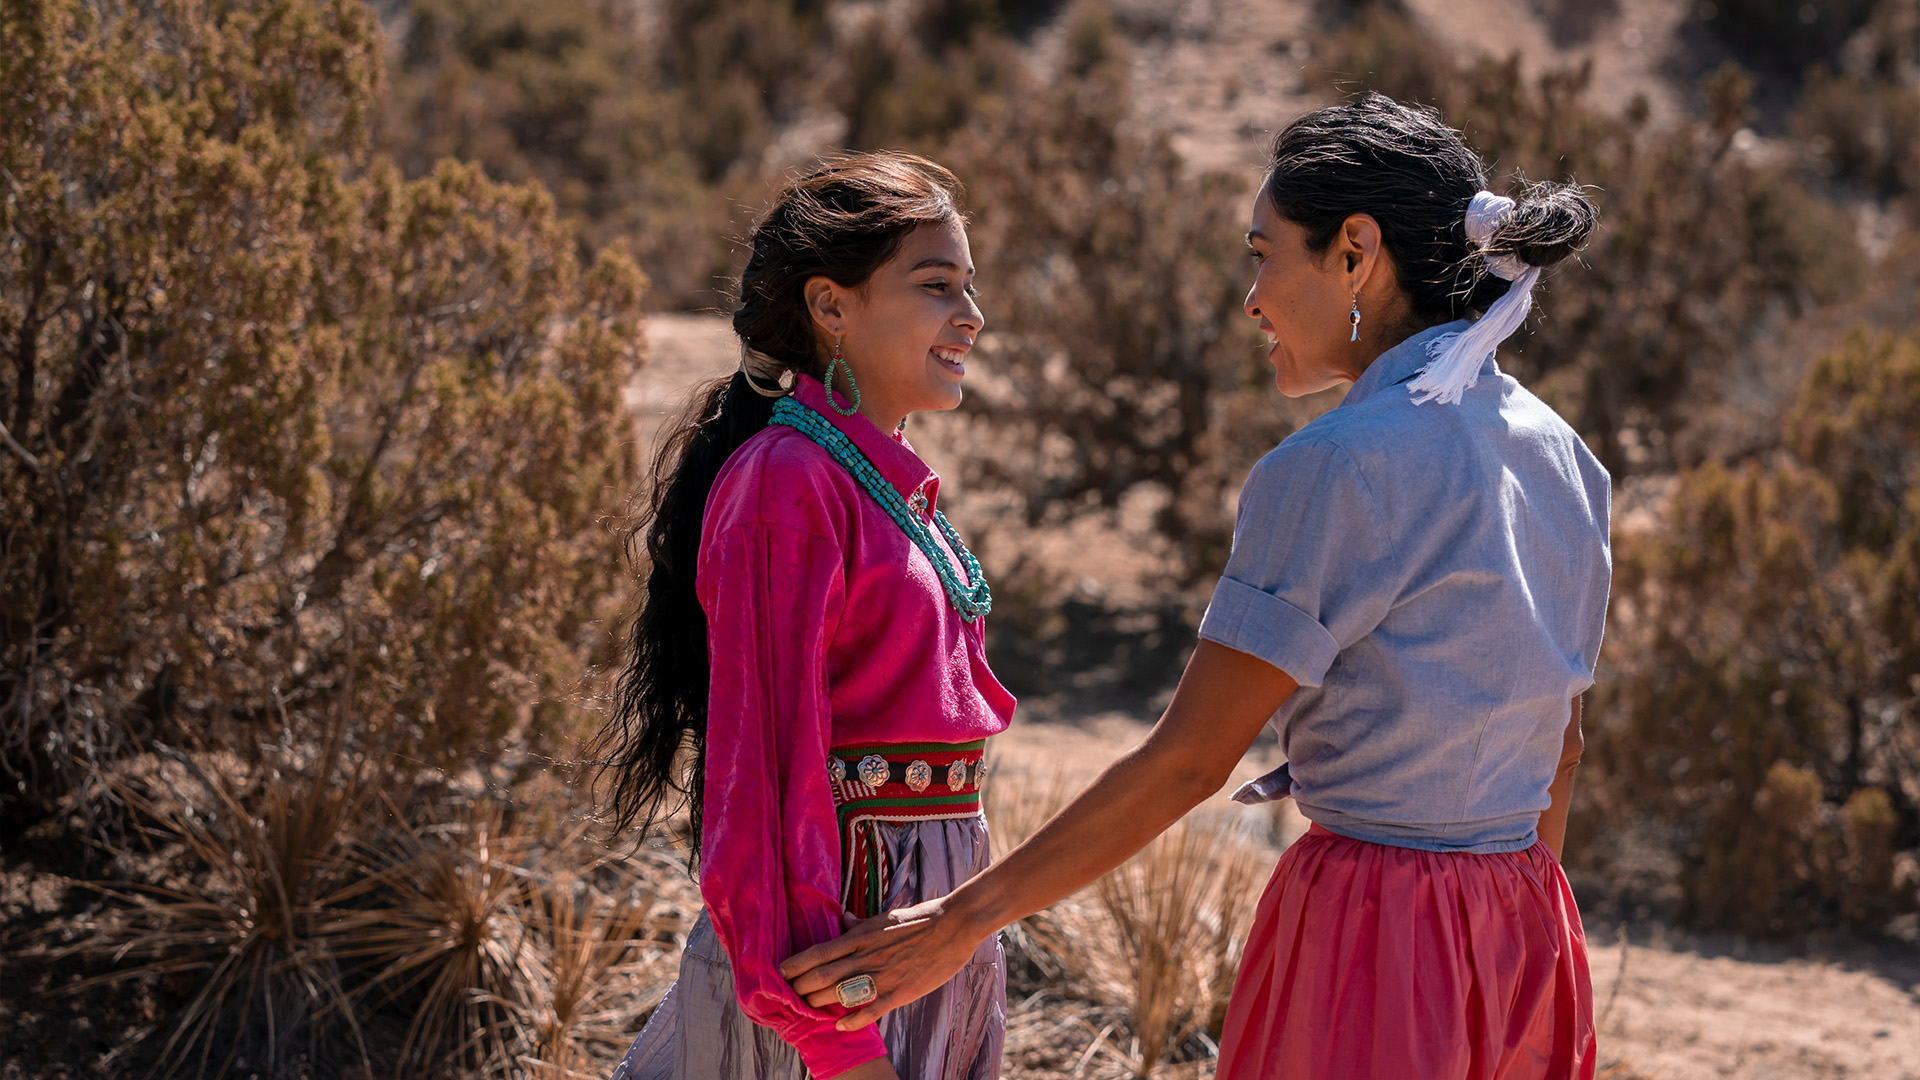 K'e, Navajo ceremonies amidst crime investigation. , TV-14, Season 1053388, Episode 3